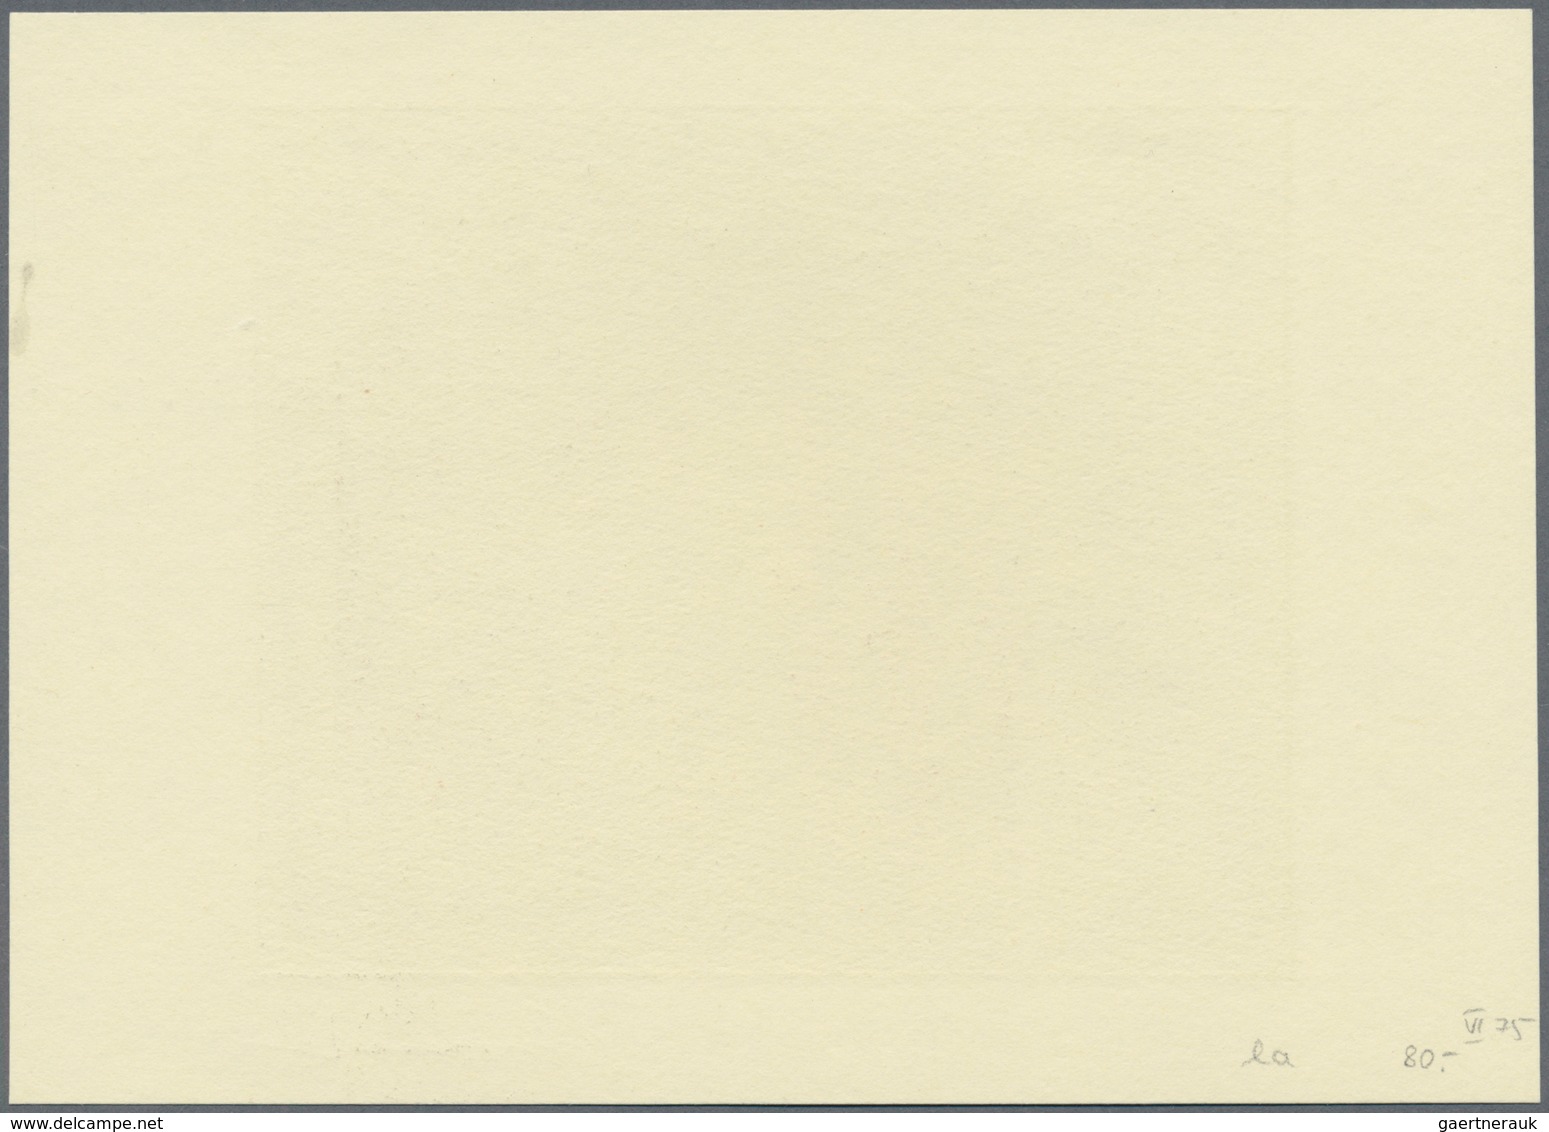 China - Volksrepublik - Ganzsachen: 1970/73, "paper cut" envelope 10 f. carmine uprated 2 f. (strip-